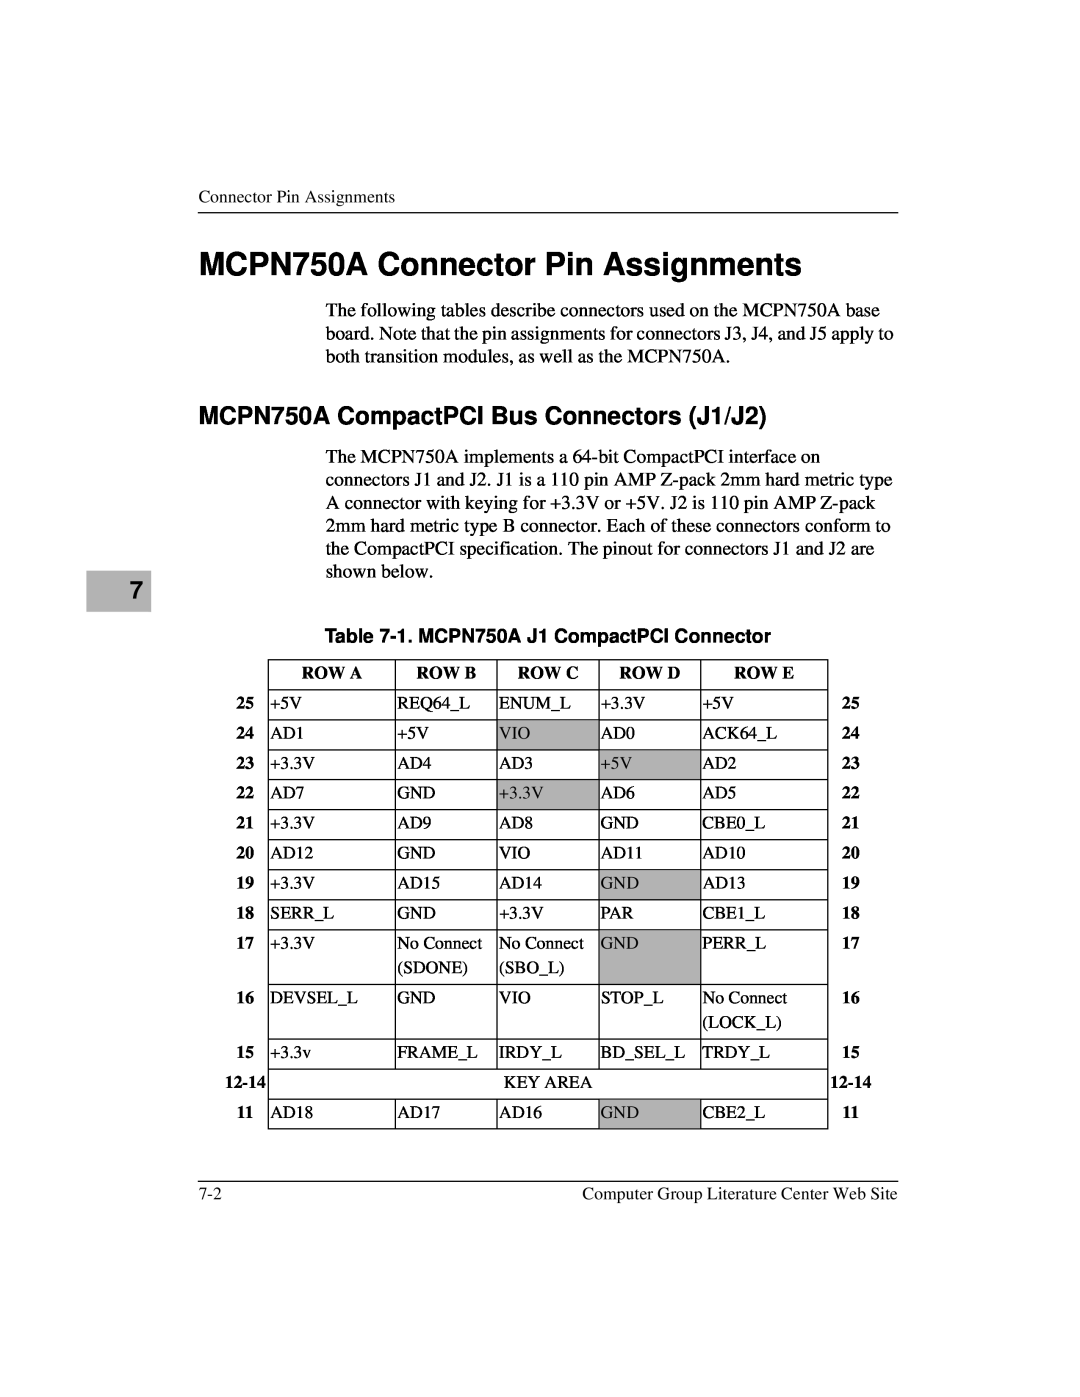 Motorola IH5 manual MCPN750A Connector Pin Assignments, MCPN750A CompactPCI Bus Connectors J1/J2 